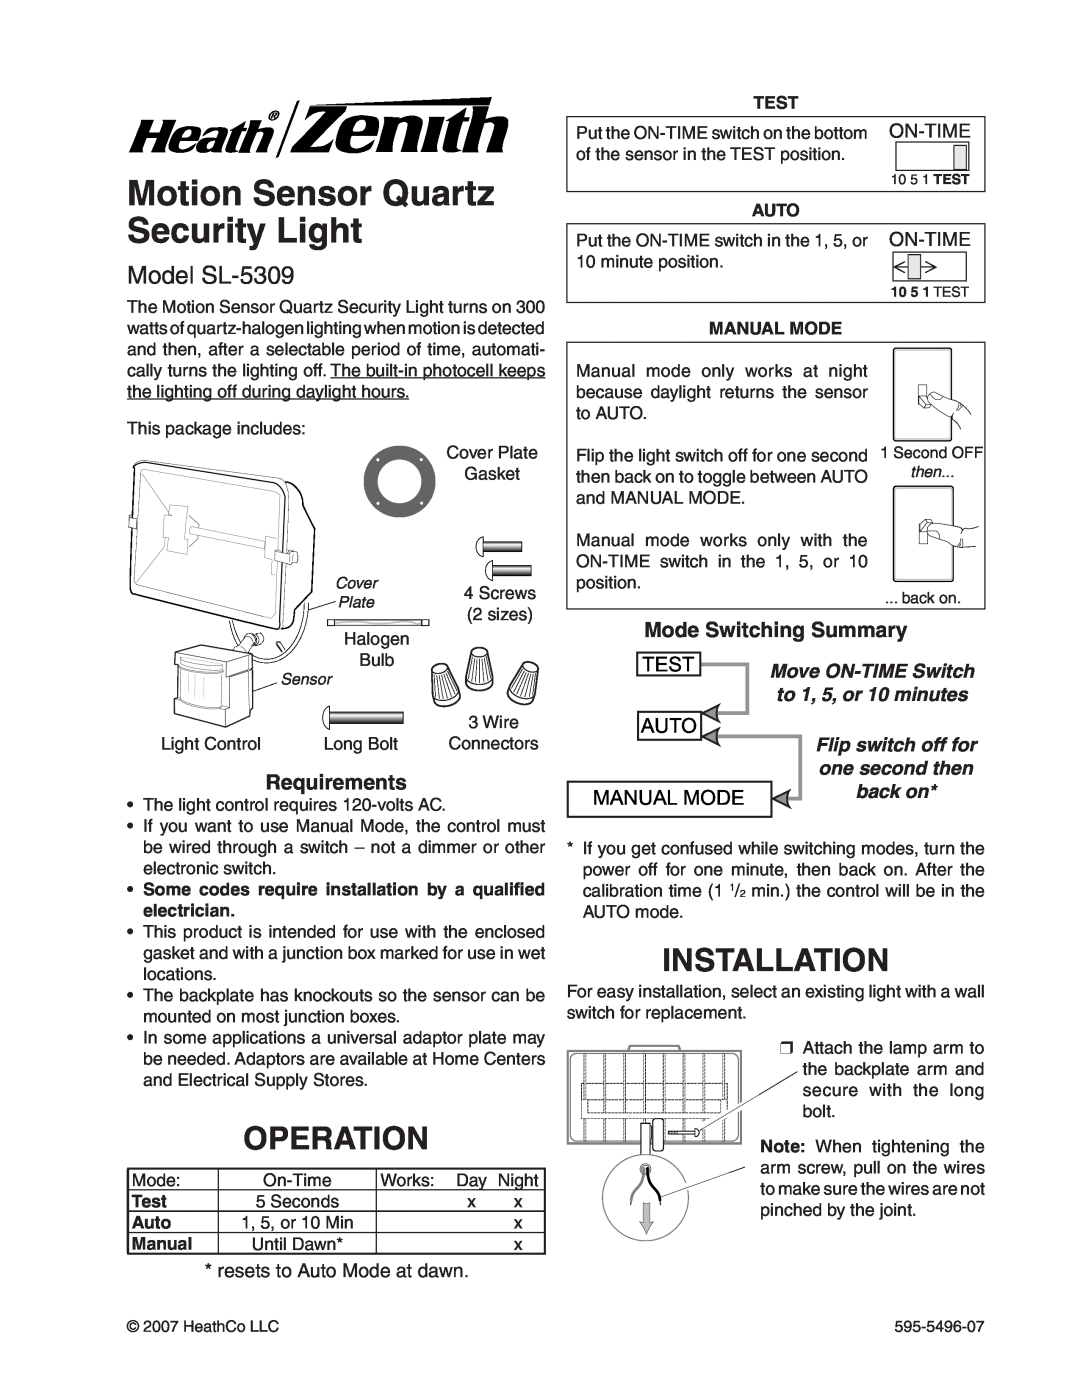 Heath Zenith manual Motion Sensor Quartz Security Light, Operation, Installation, Model SL-5309, On-Time, Test, Auto 